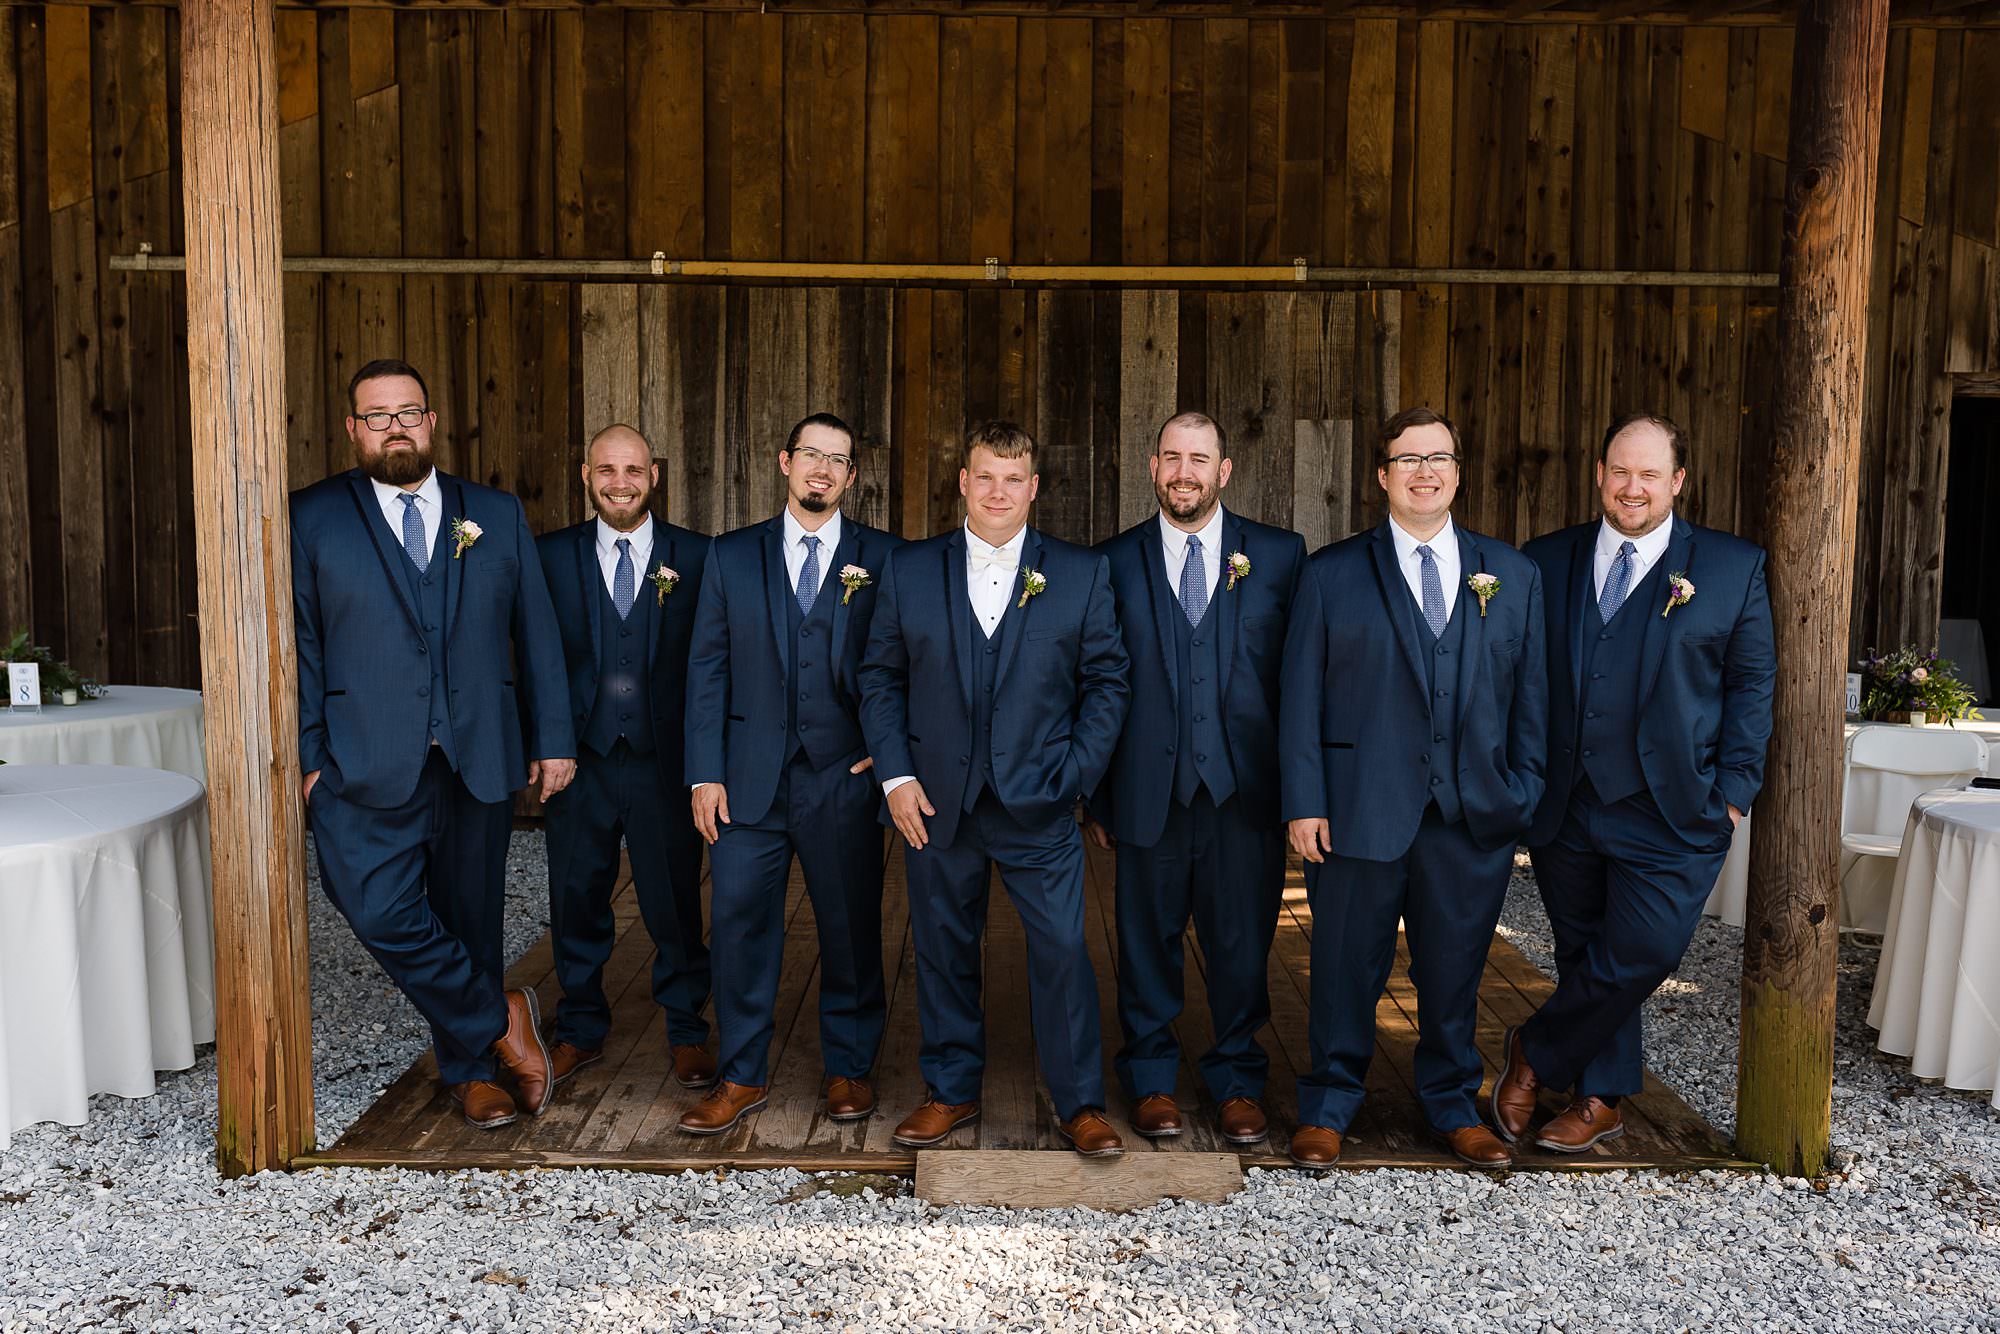 groomsmen barn farm wedding navy